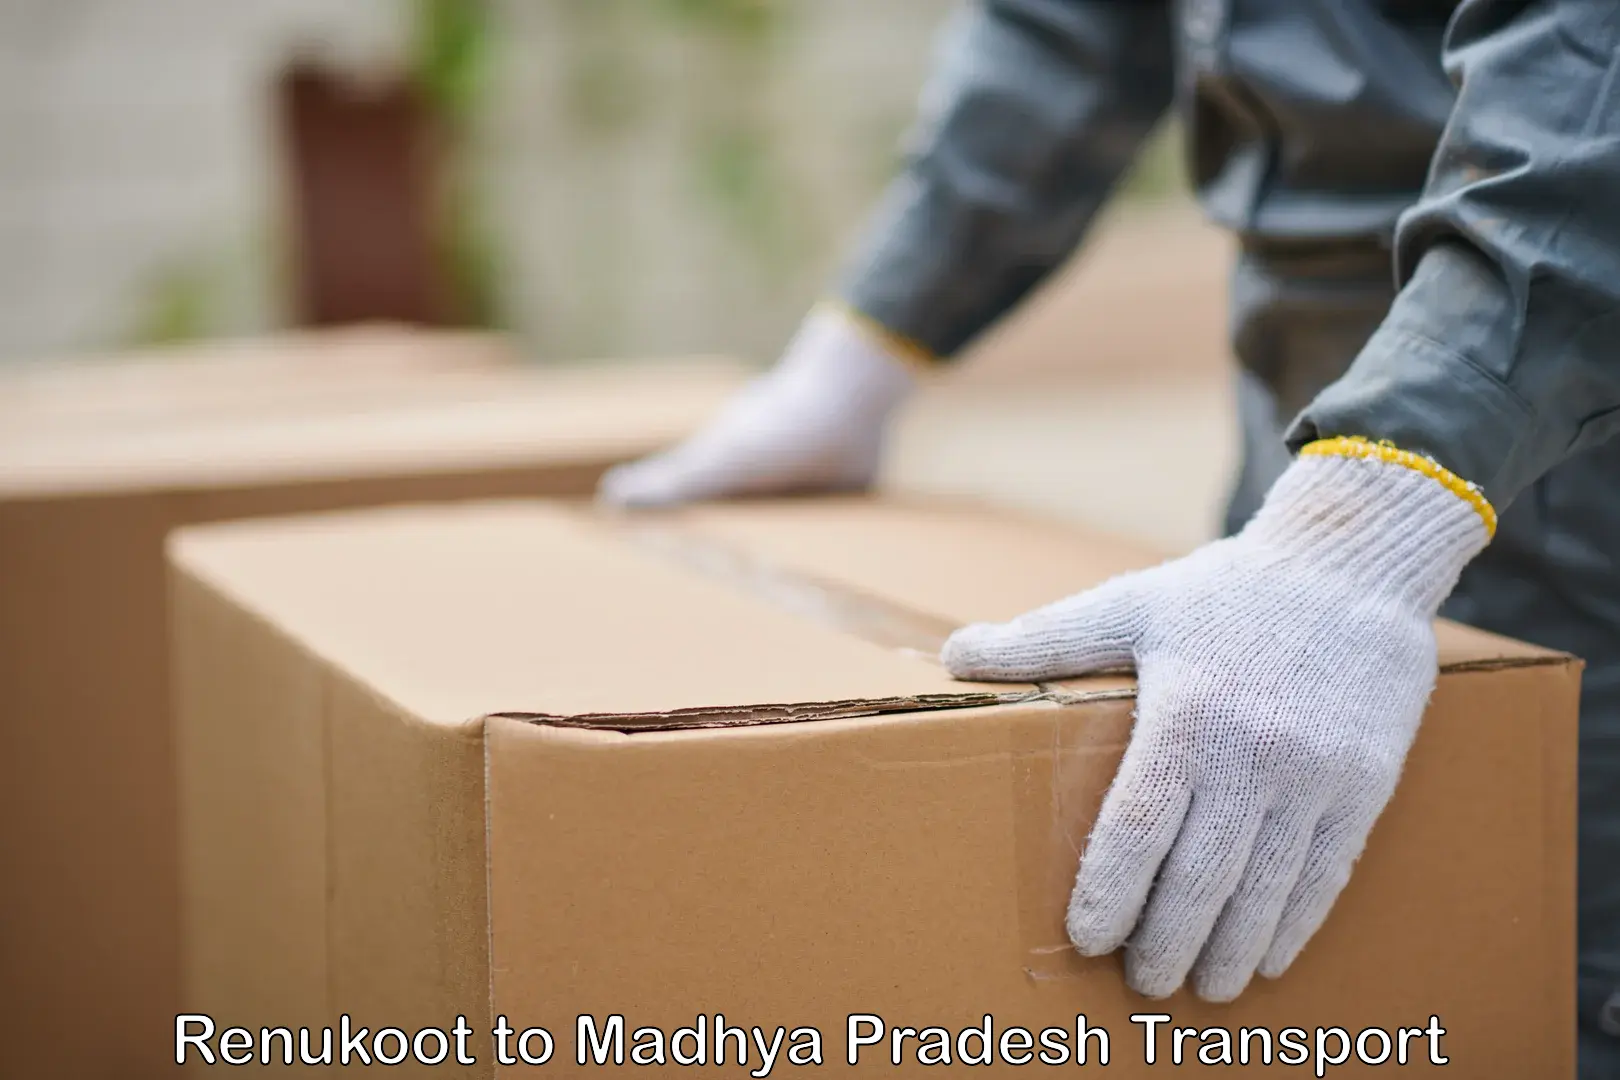 Delivery service Renukoot to Madhya Pradesh